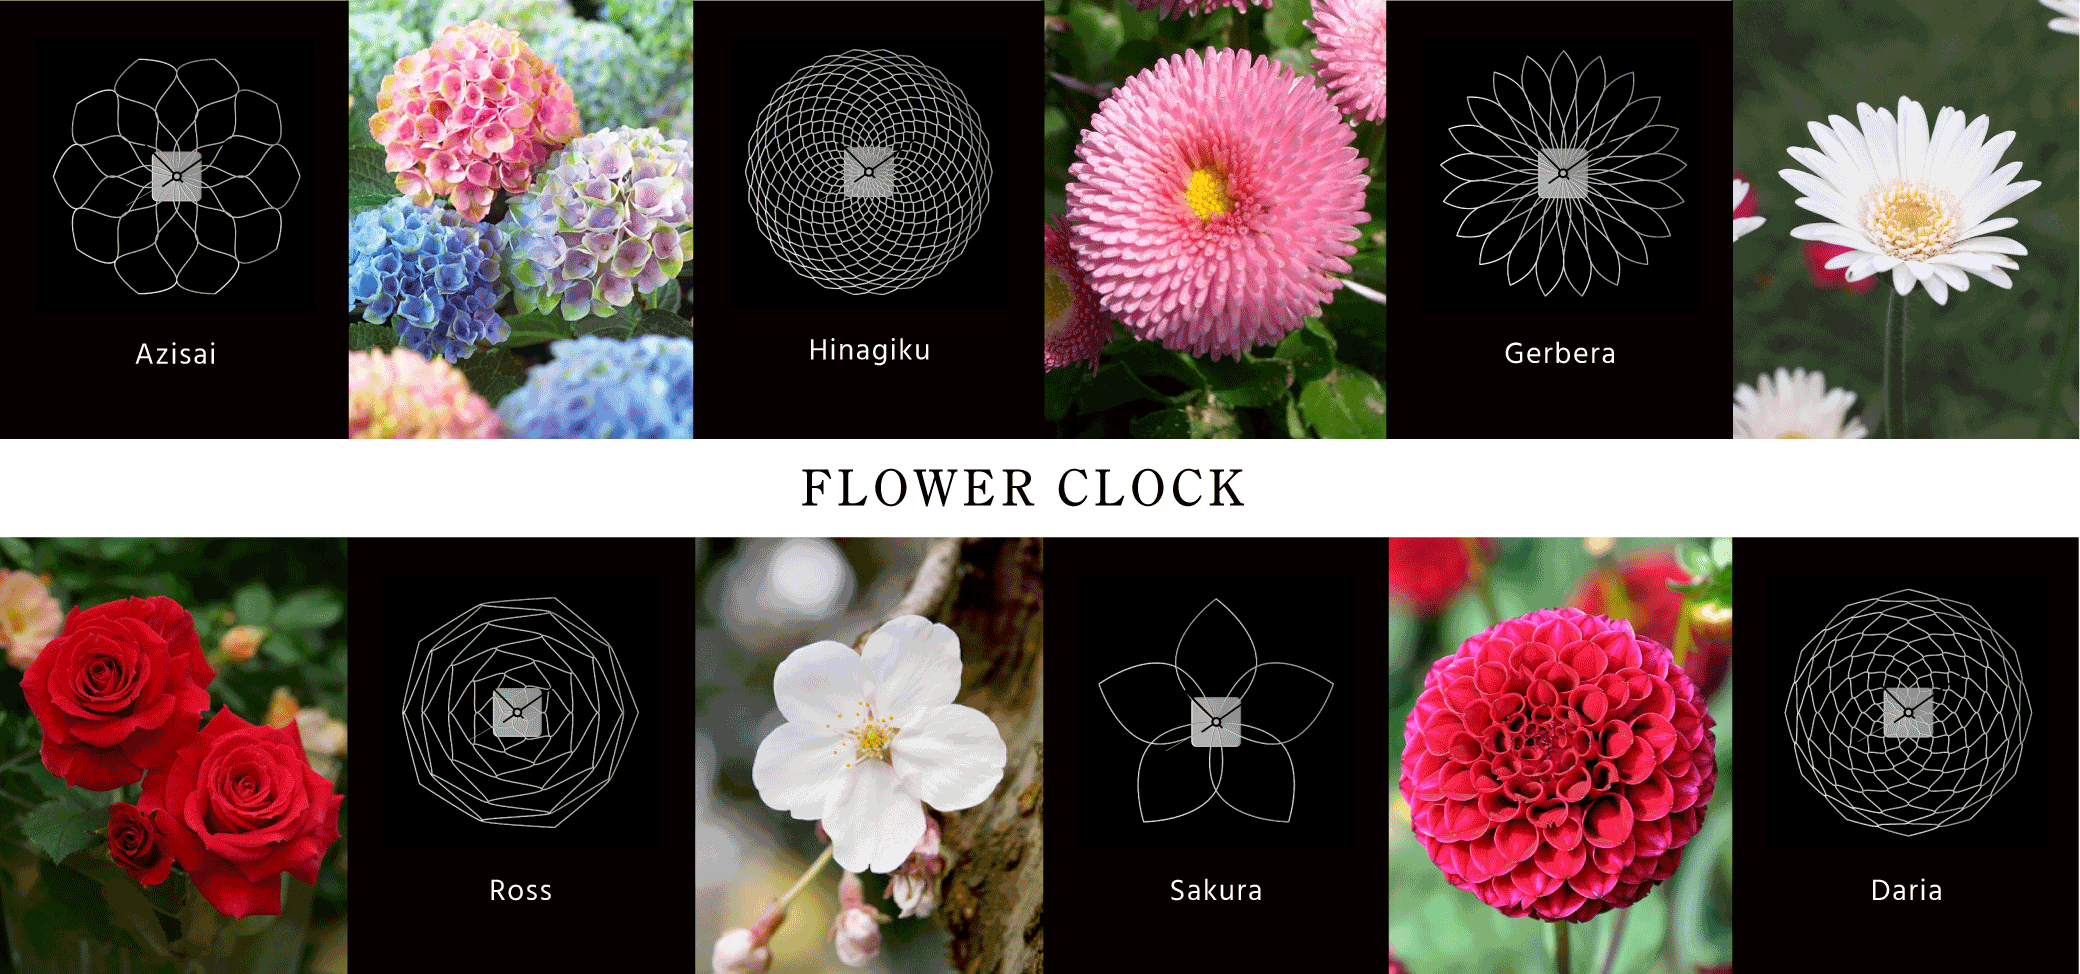 FLOWER CLOCK